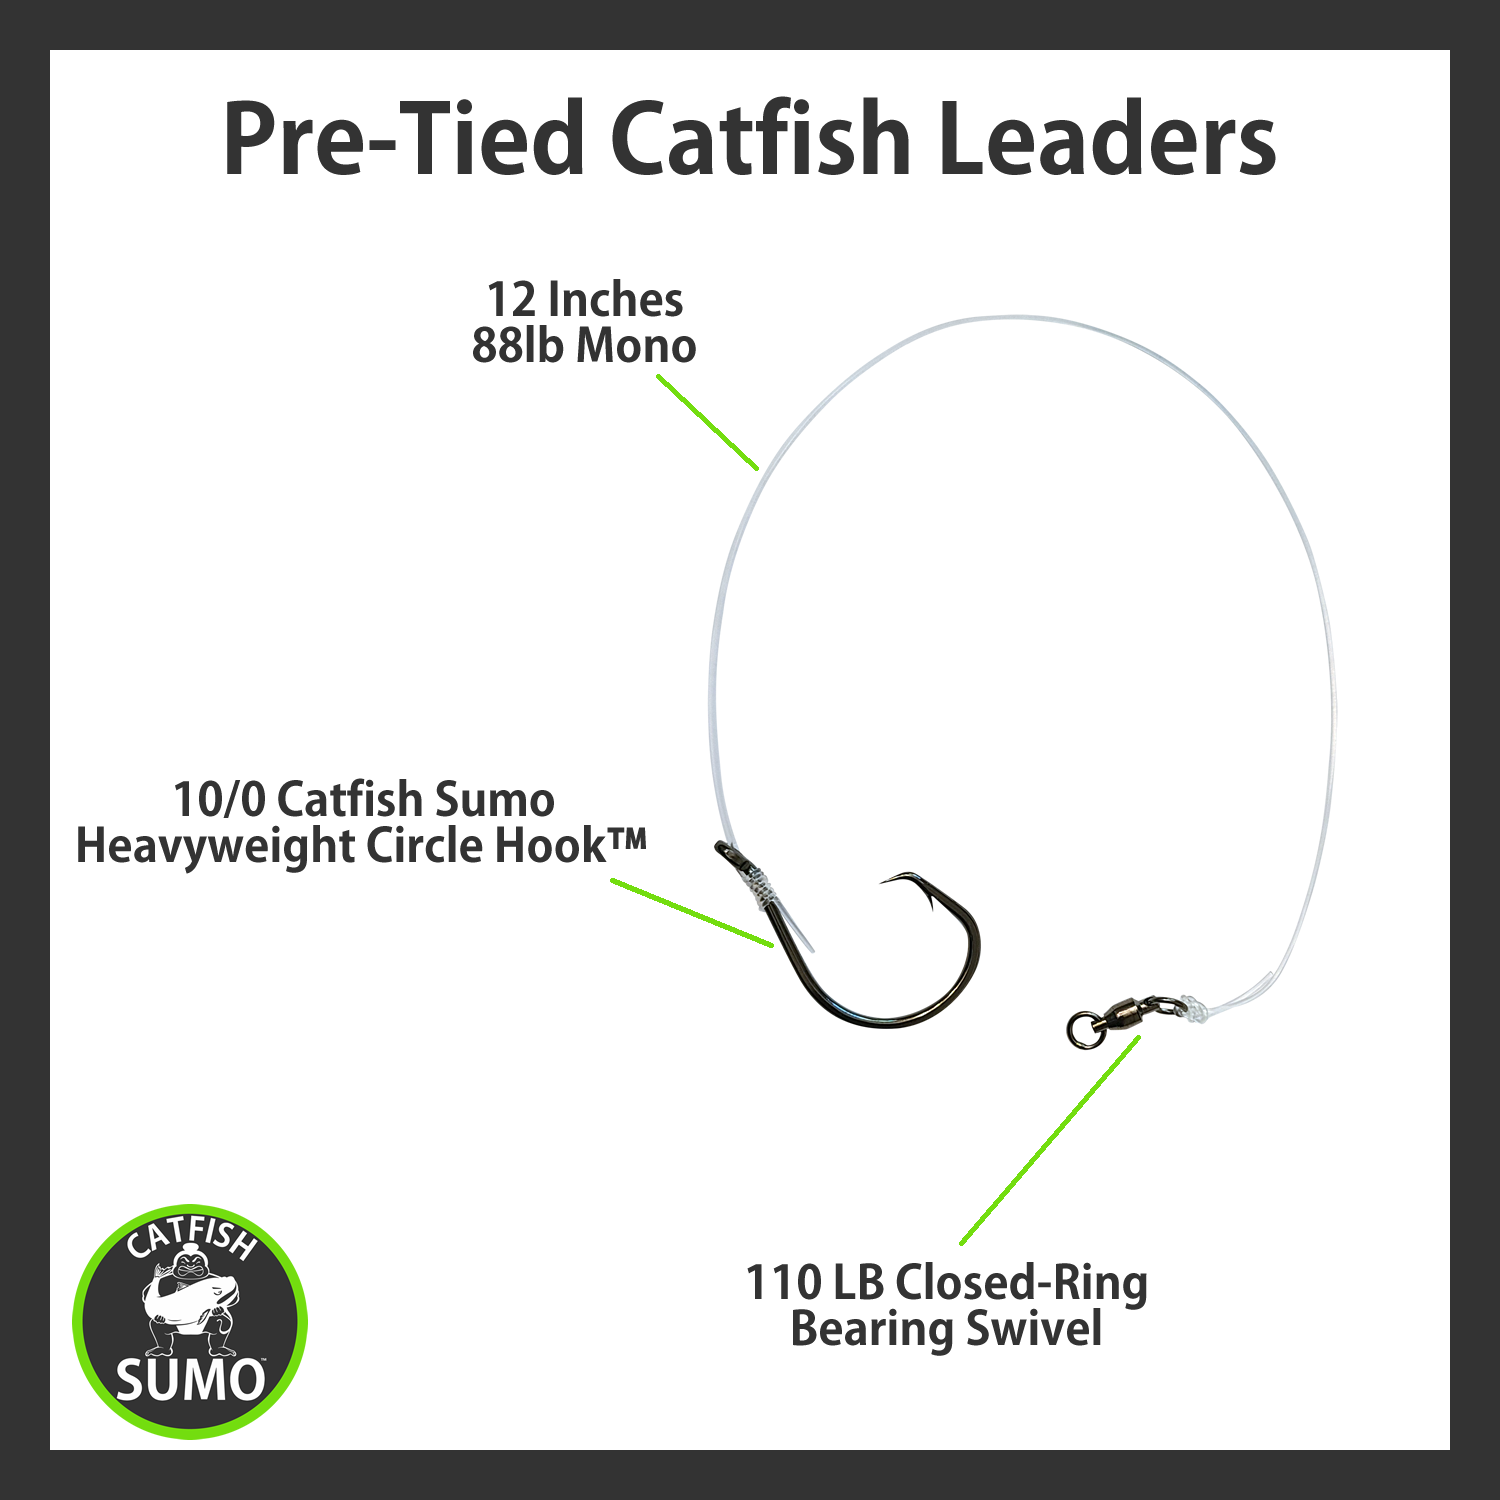 Pre-Tied Trophy Catfishing Leaders - Heavyweight Circle Hook™ / 10/0